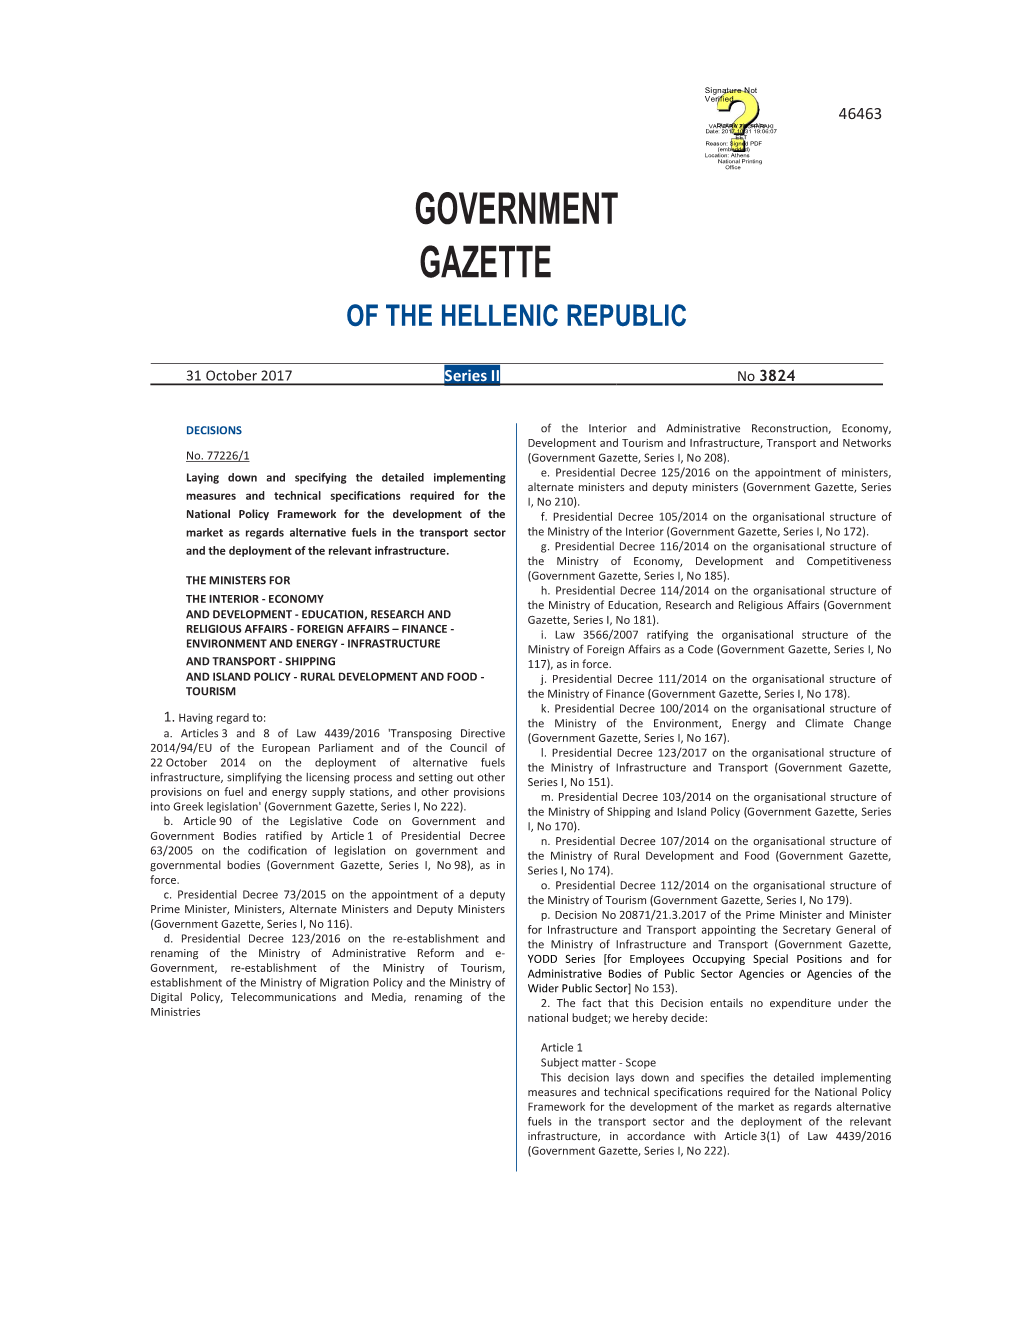 Government Gazette of the Hellenic Republic